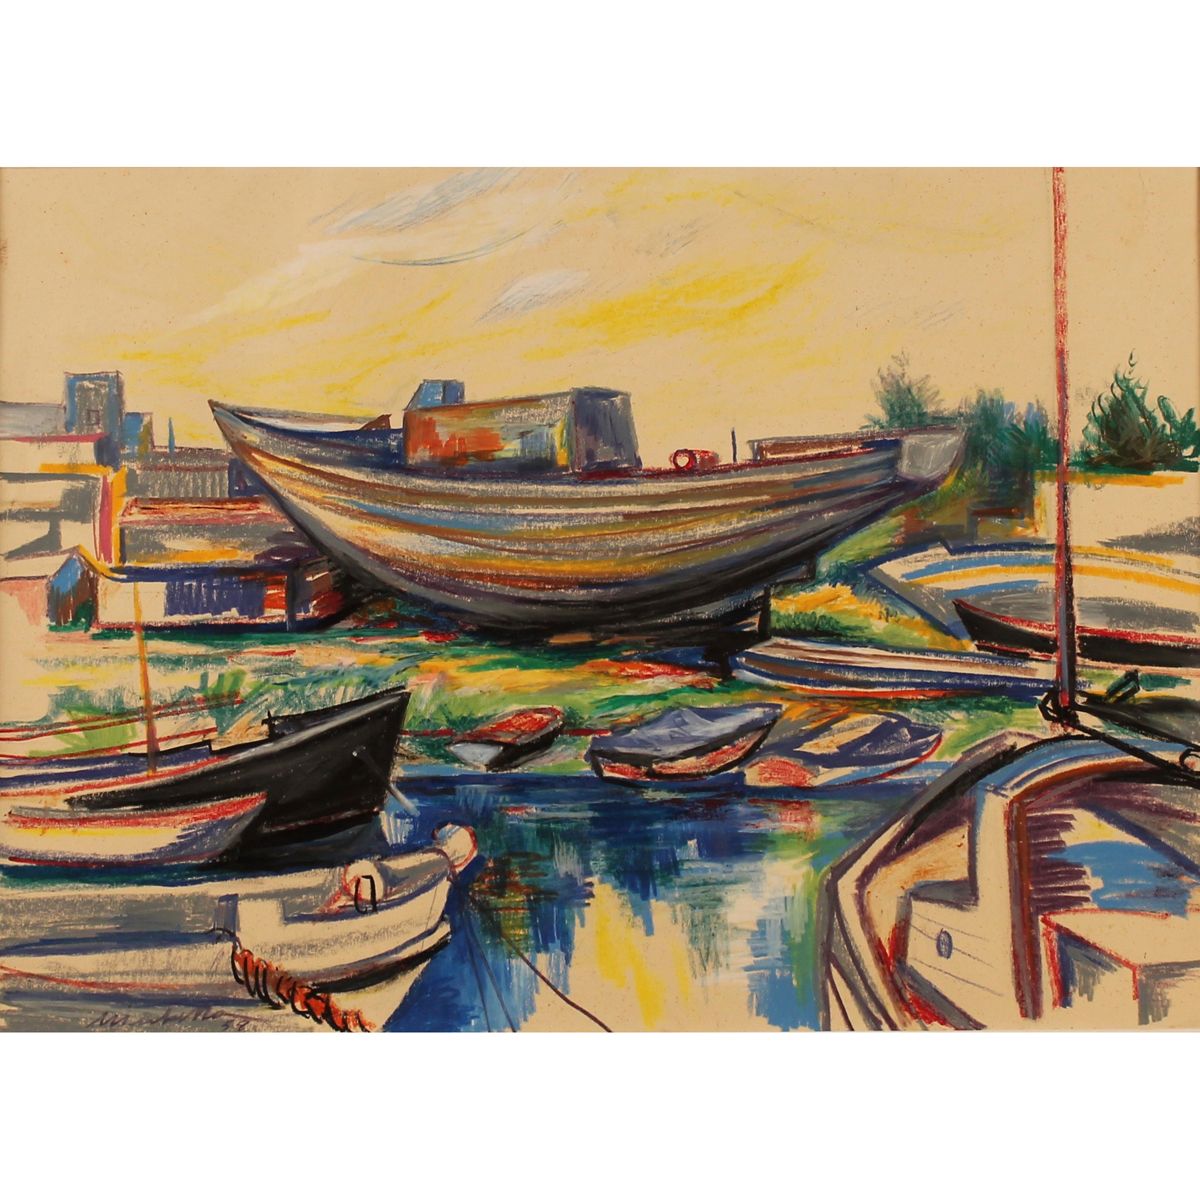 SARO MIRABELLA (1914/1972) "Barche a secco" - "Dry boats" Pastel sur papier. Dat&hellip;